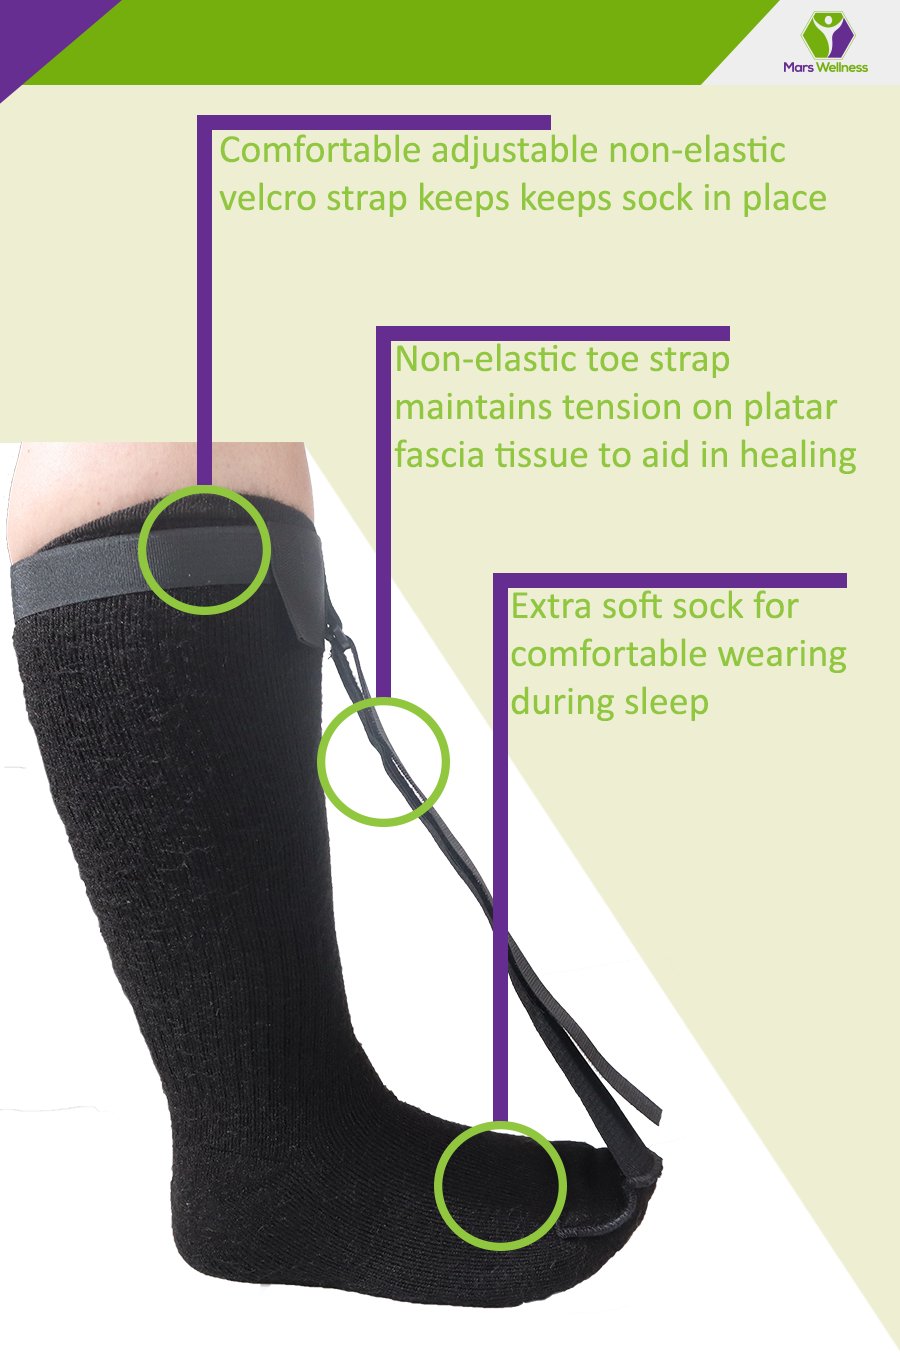 Modetro Plantar Fasciitis Compression Socks at Menards®